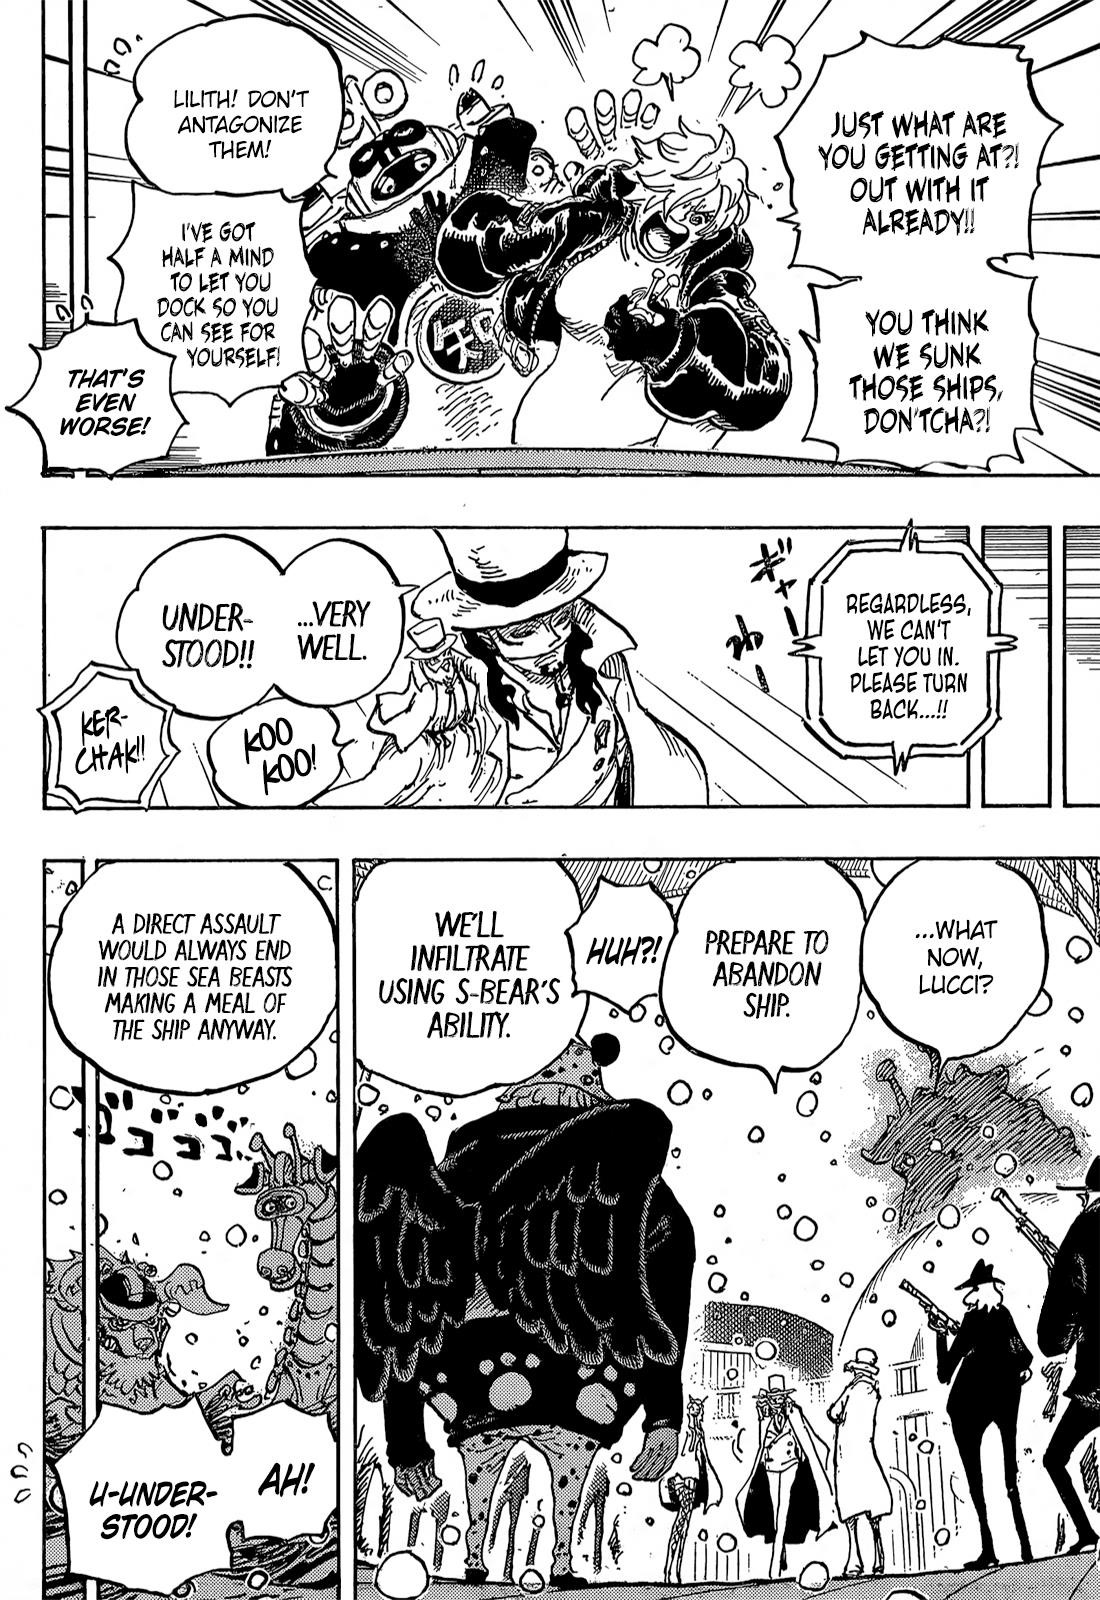 One Piece Chapter 1061 - Future Island Egghead - One Piece Manga Online